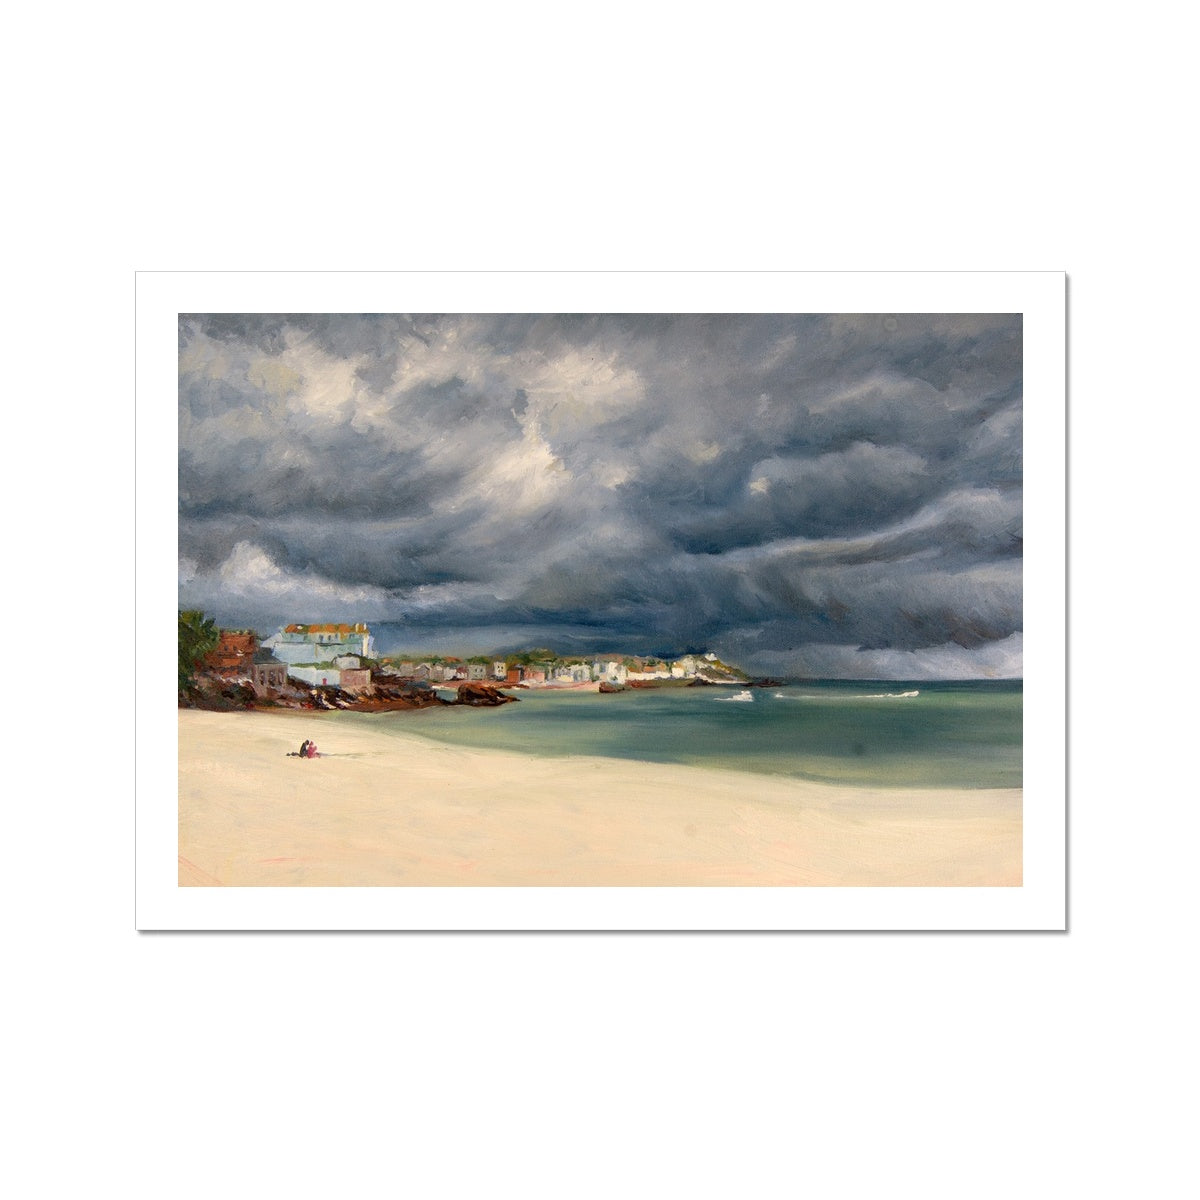 Porthminster Beach in St Ives, Cornwall Unframed art print - lorrainefield